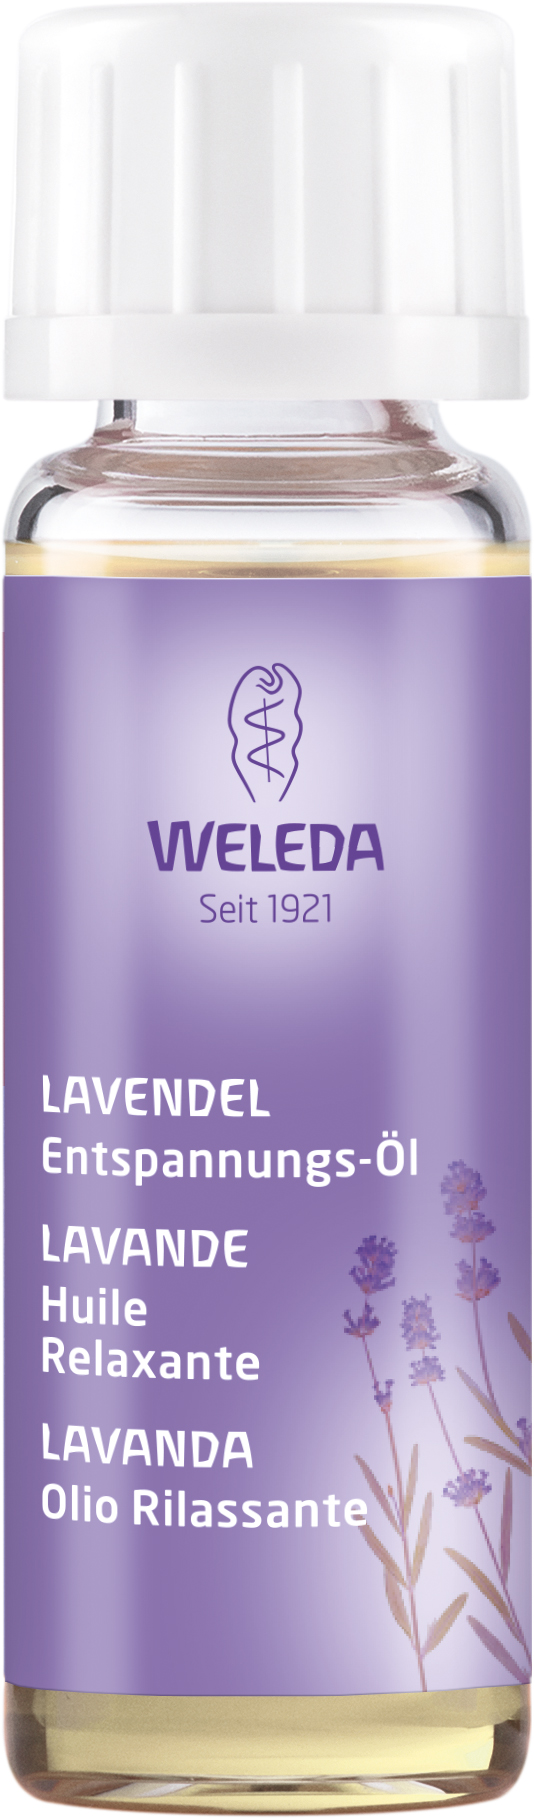 Weleda Lavendel Entspannungs-Öl 10ml